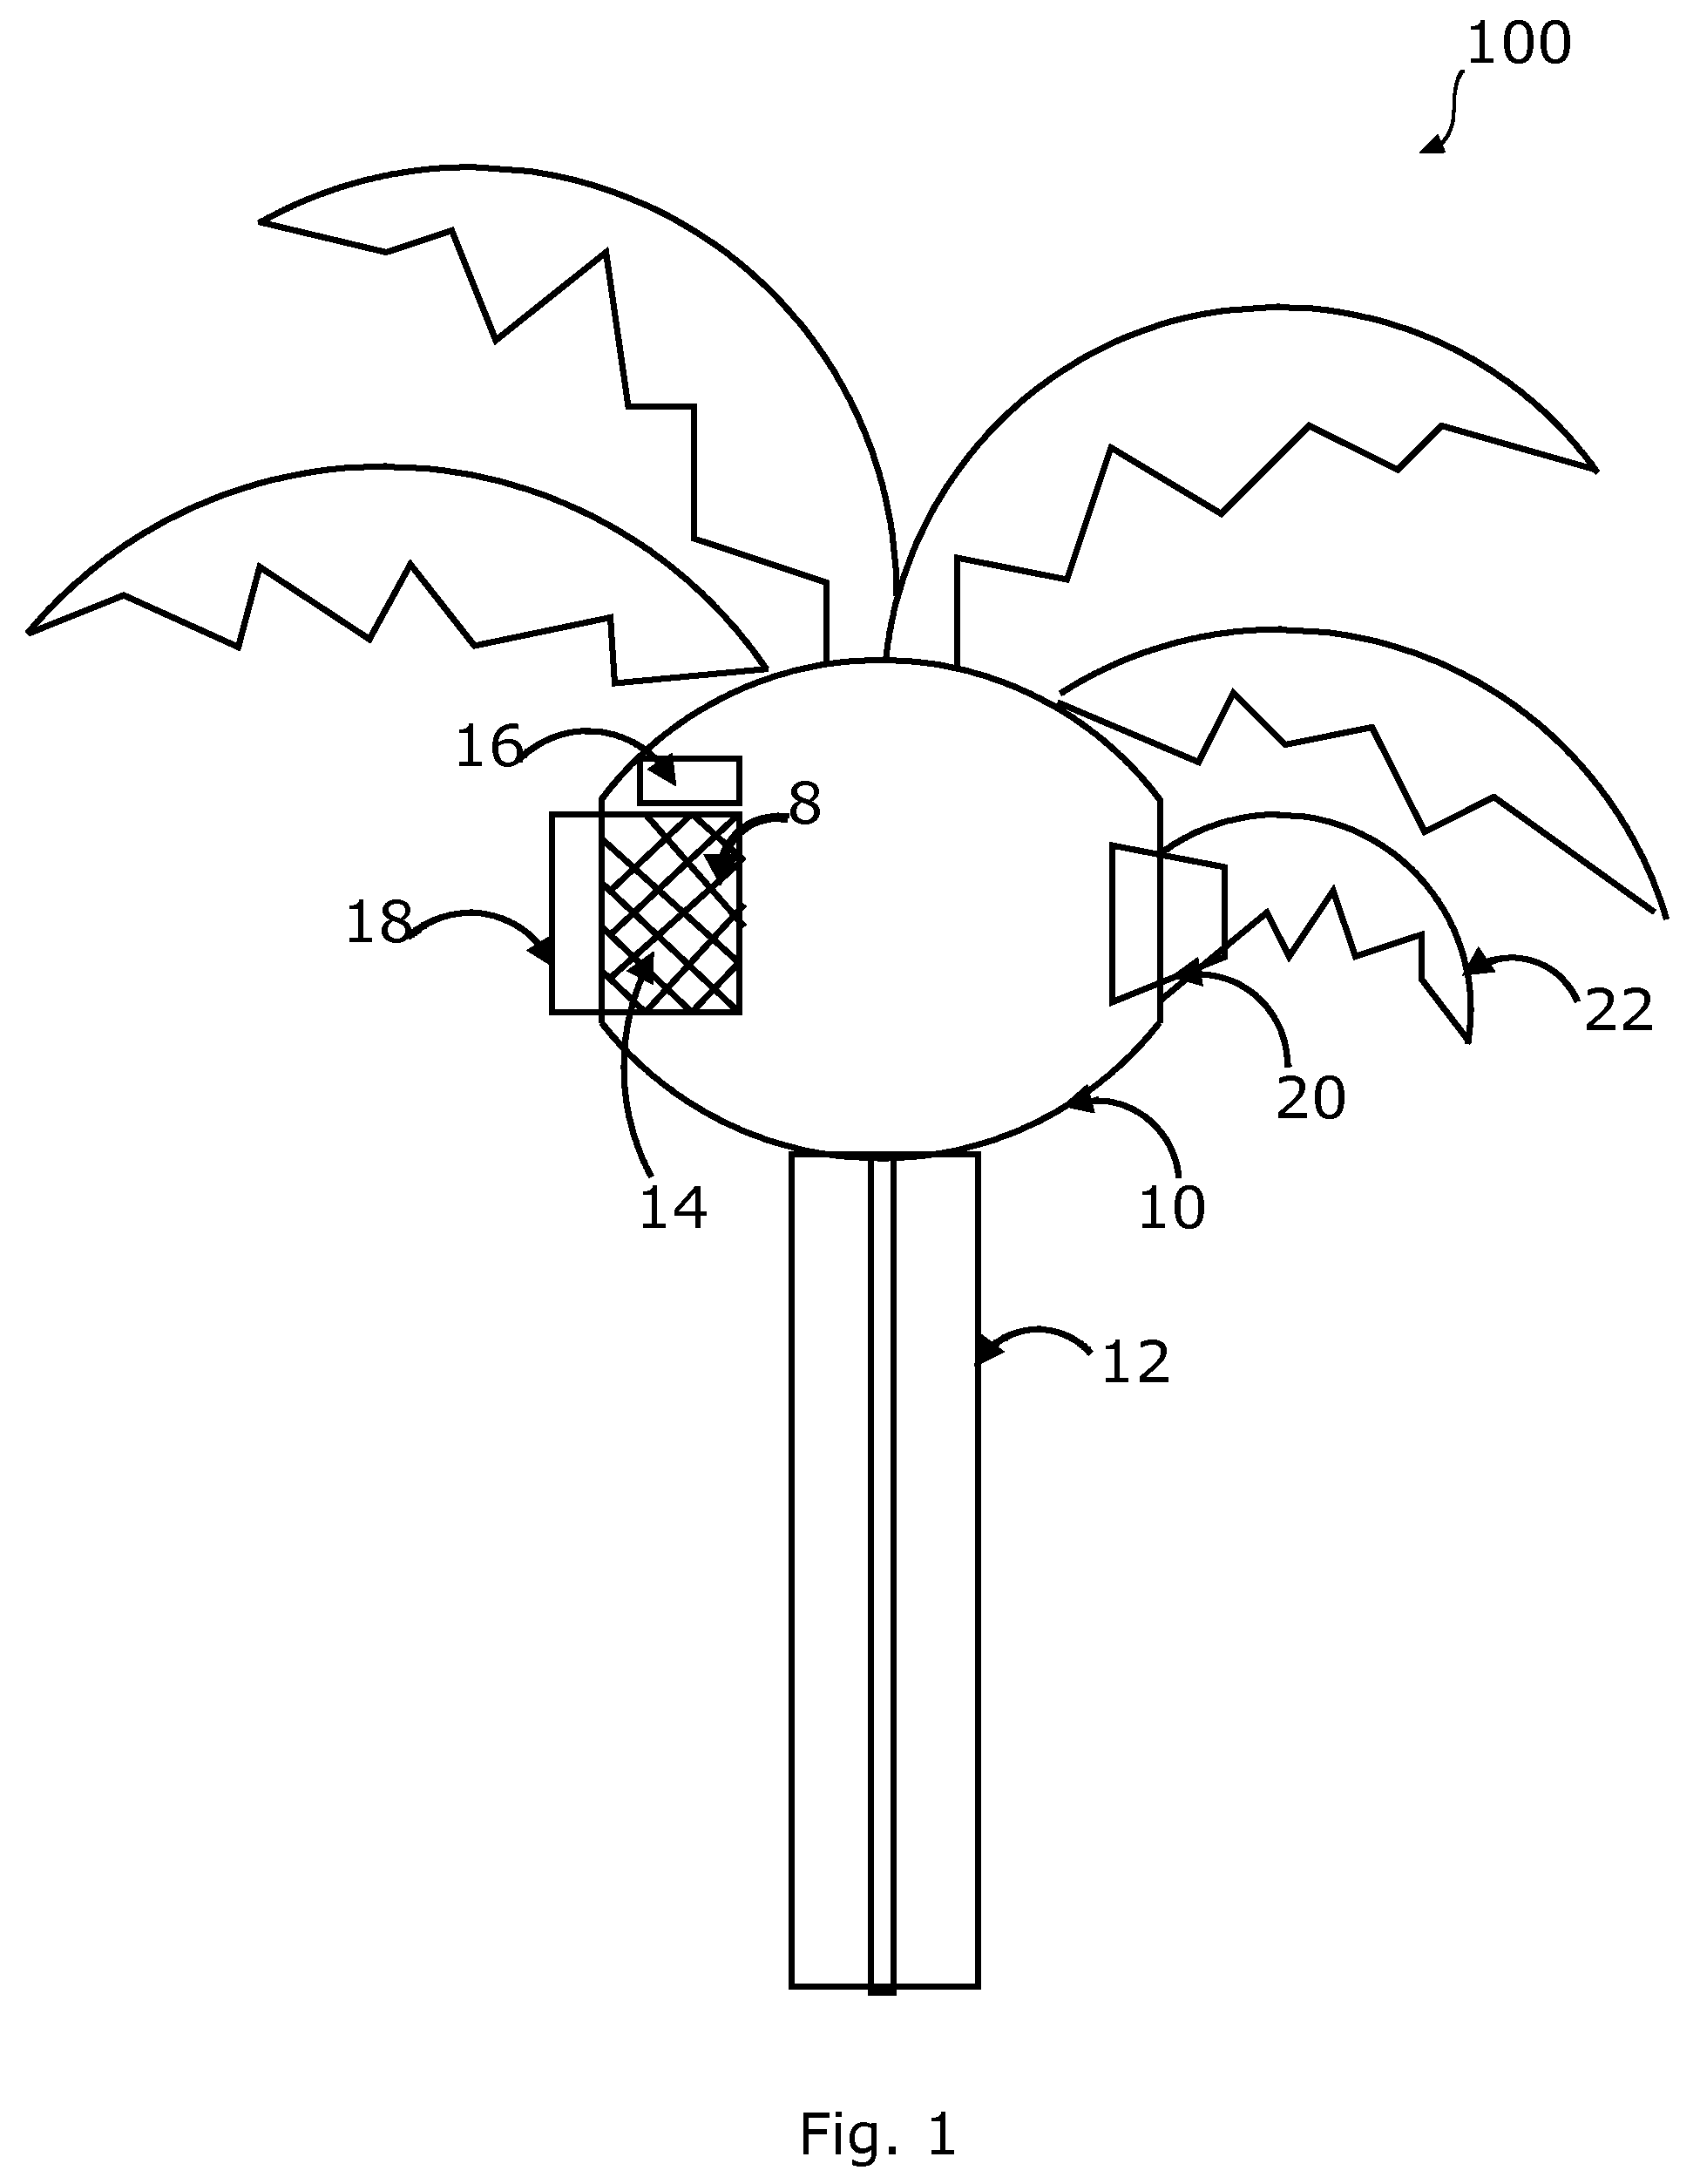 Vertical axis wind turbine